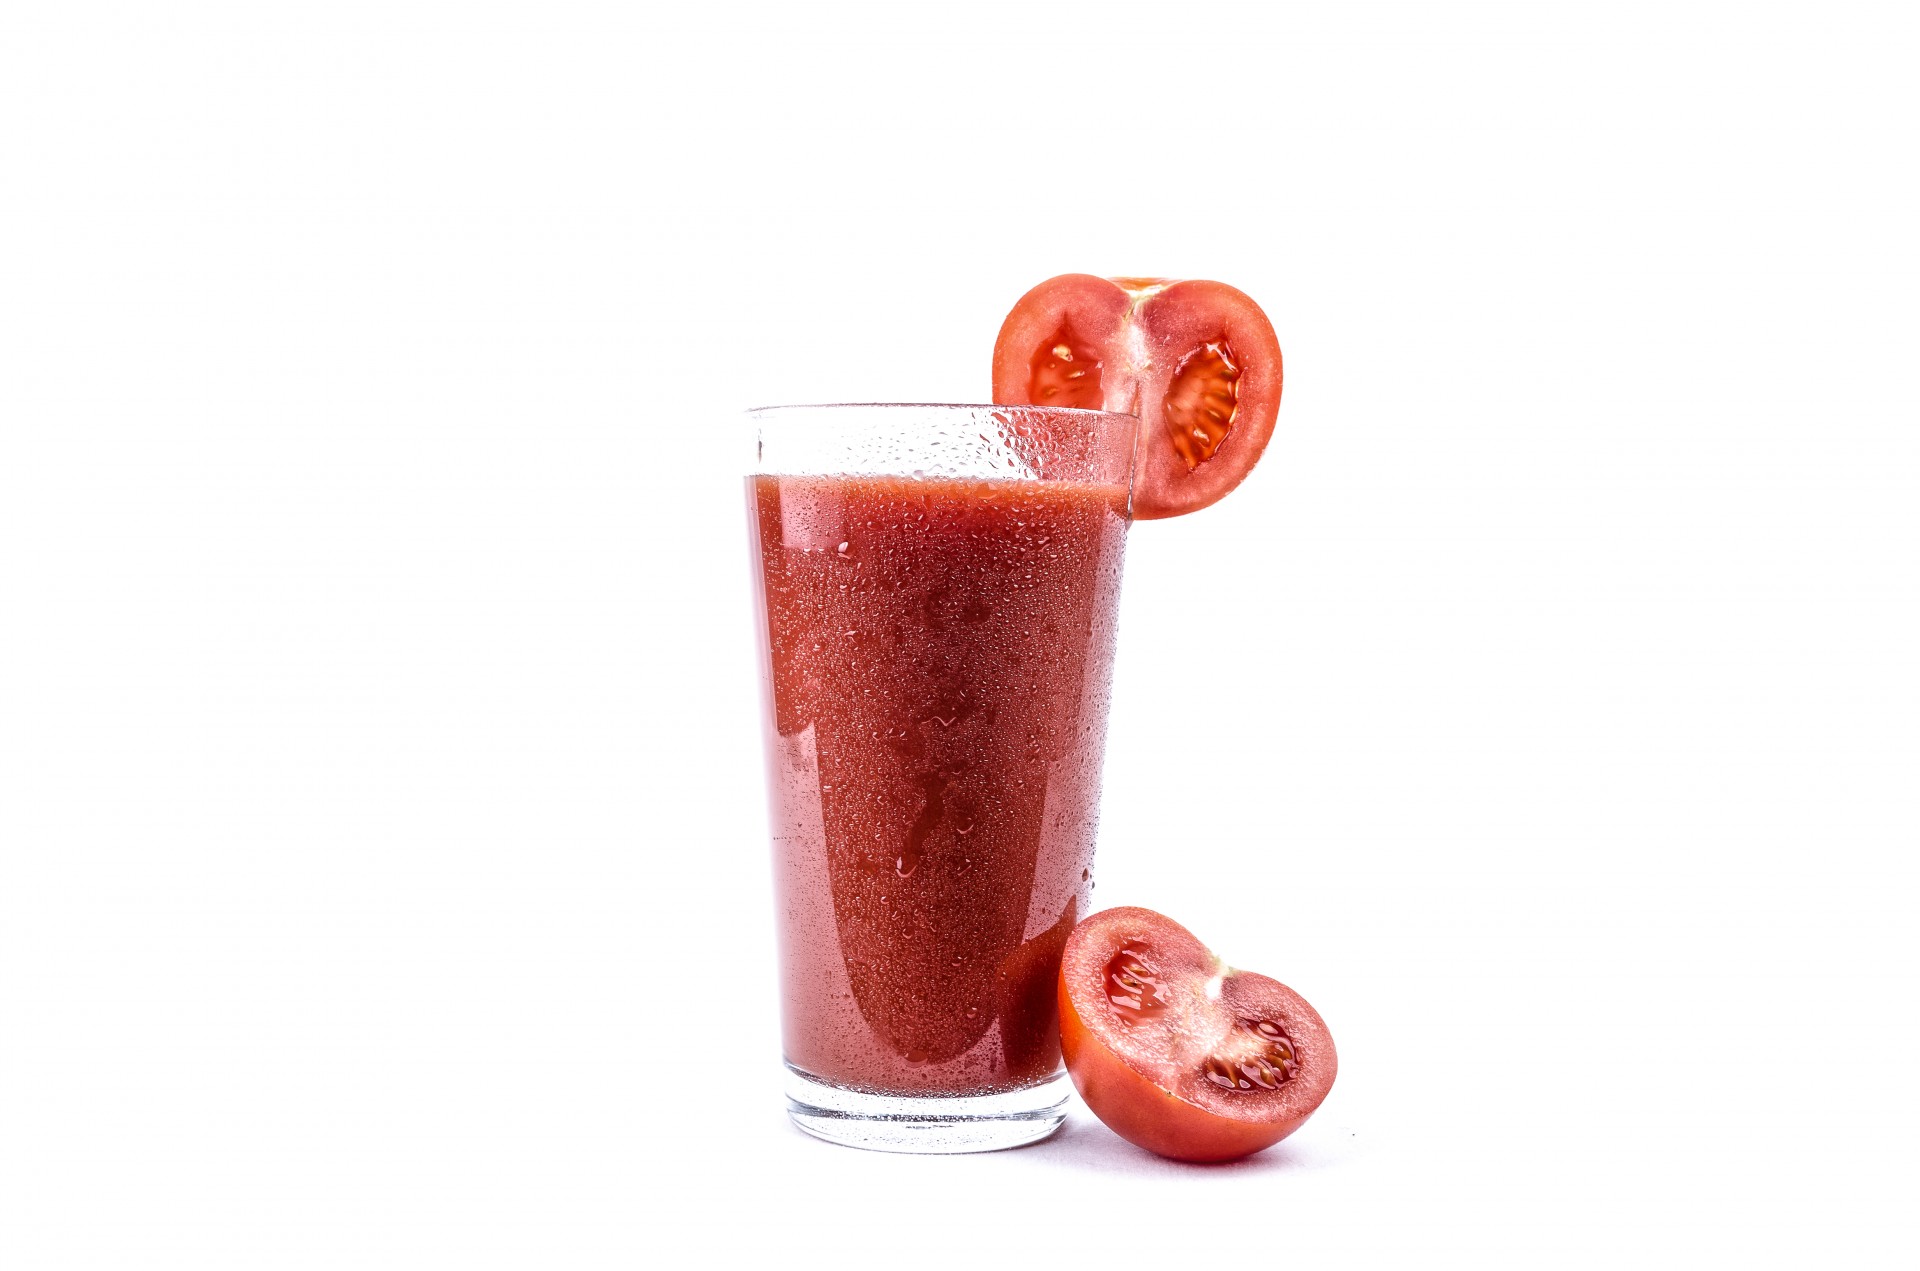 fresh-tomato-juice-and-tomato-free-stock-photo-public-domain-pictures